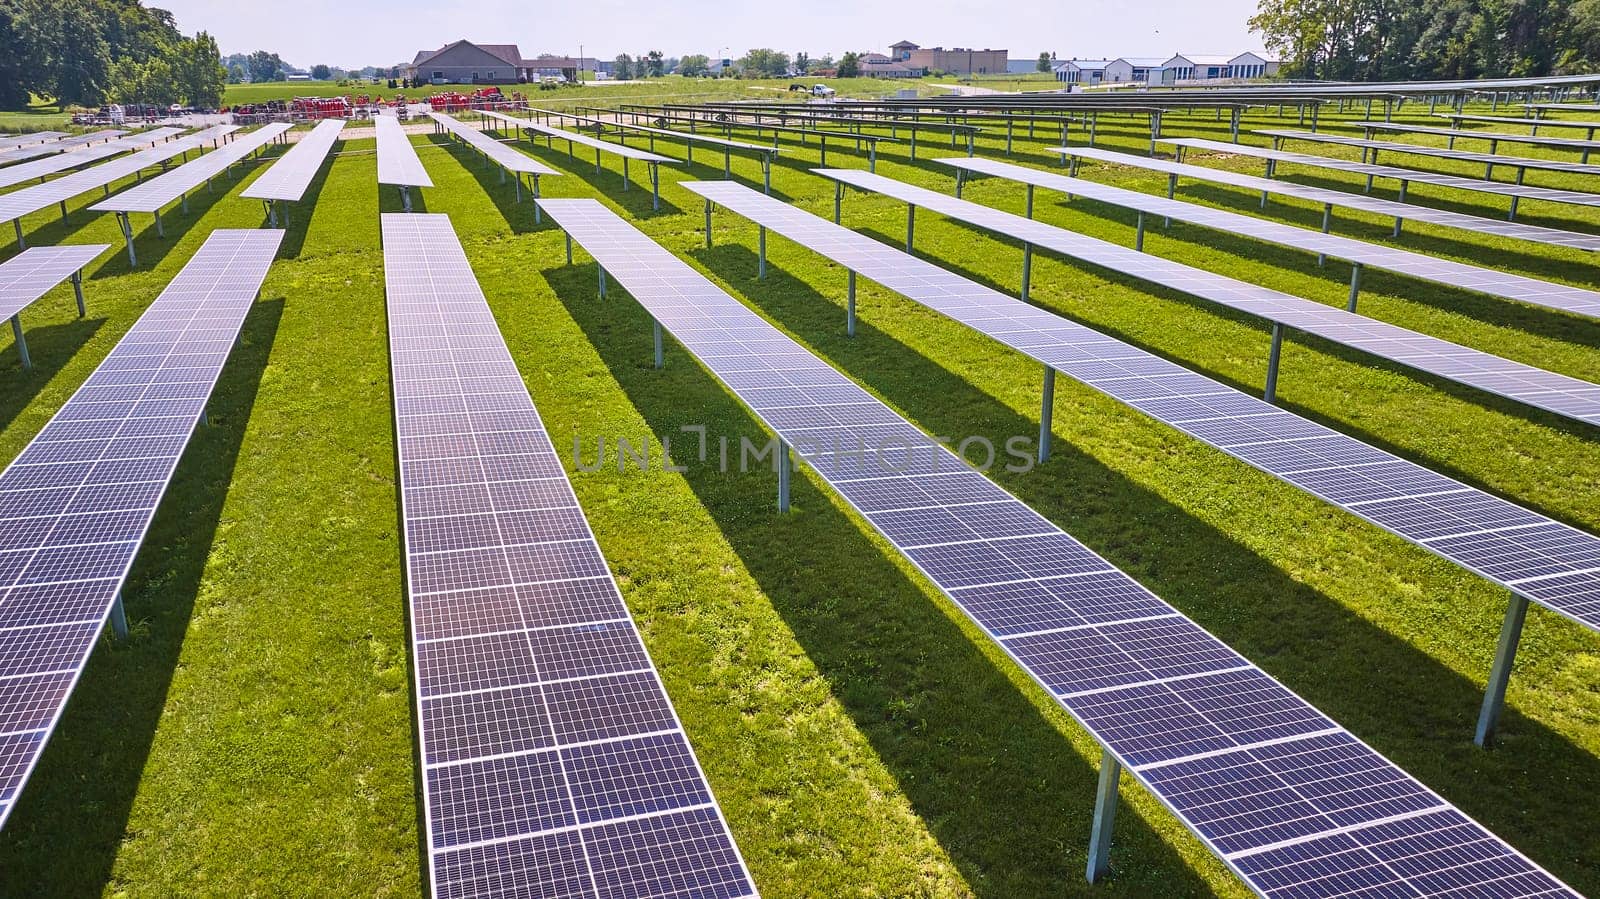 Image of Sunlight hitting solar panels on solar farm in low flying aerial